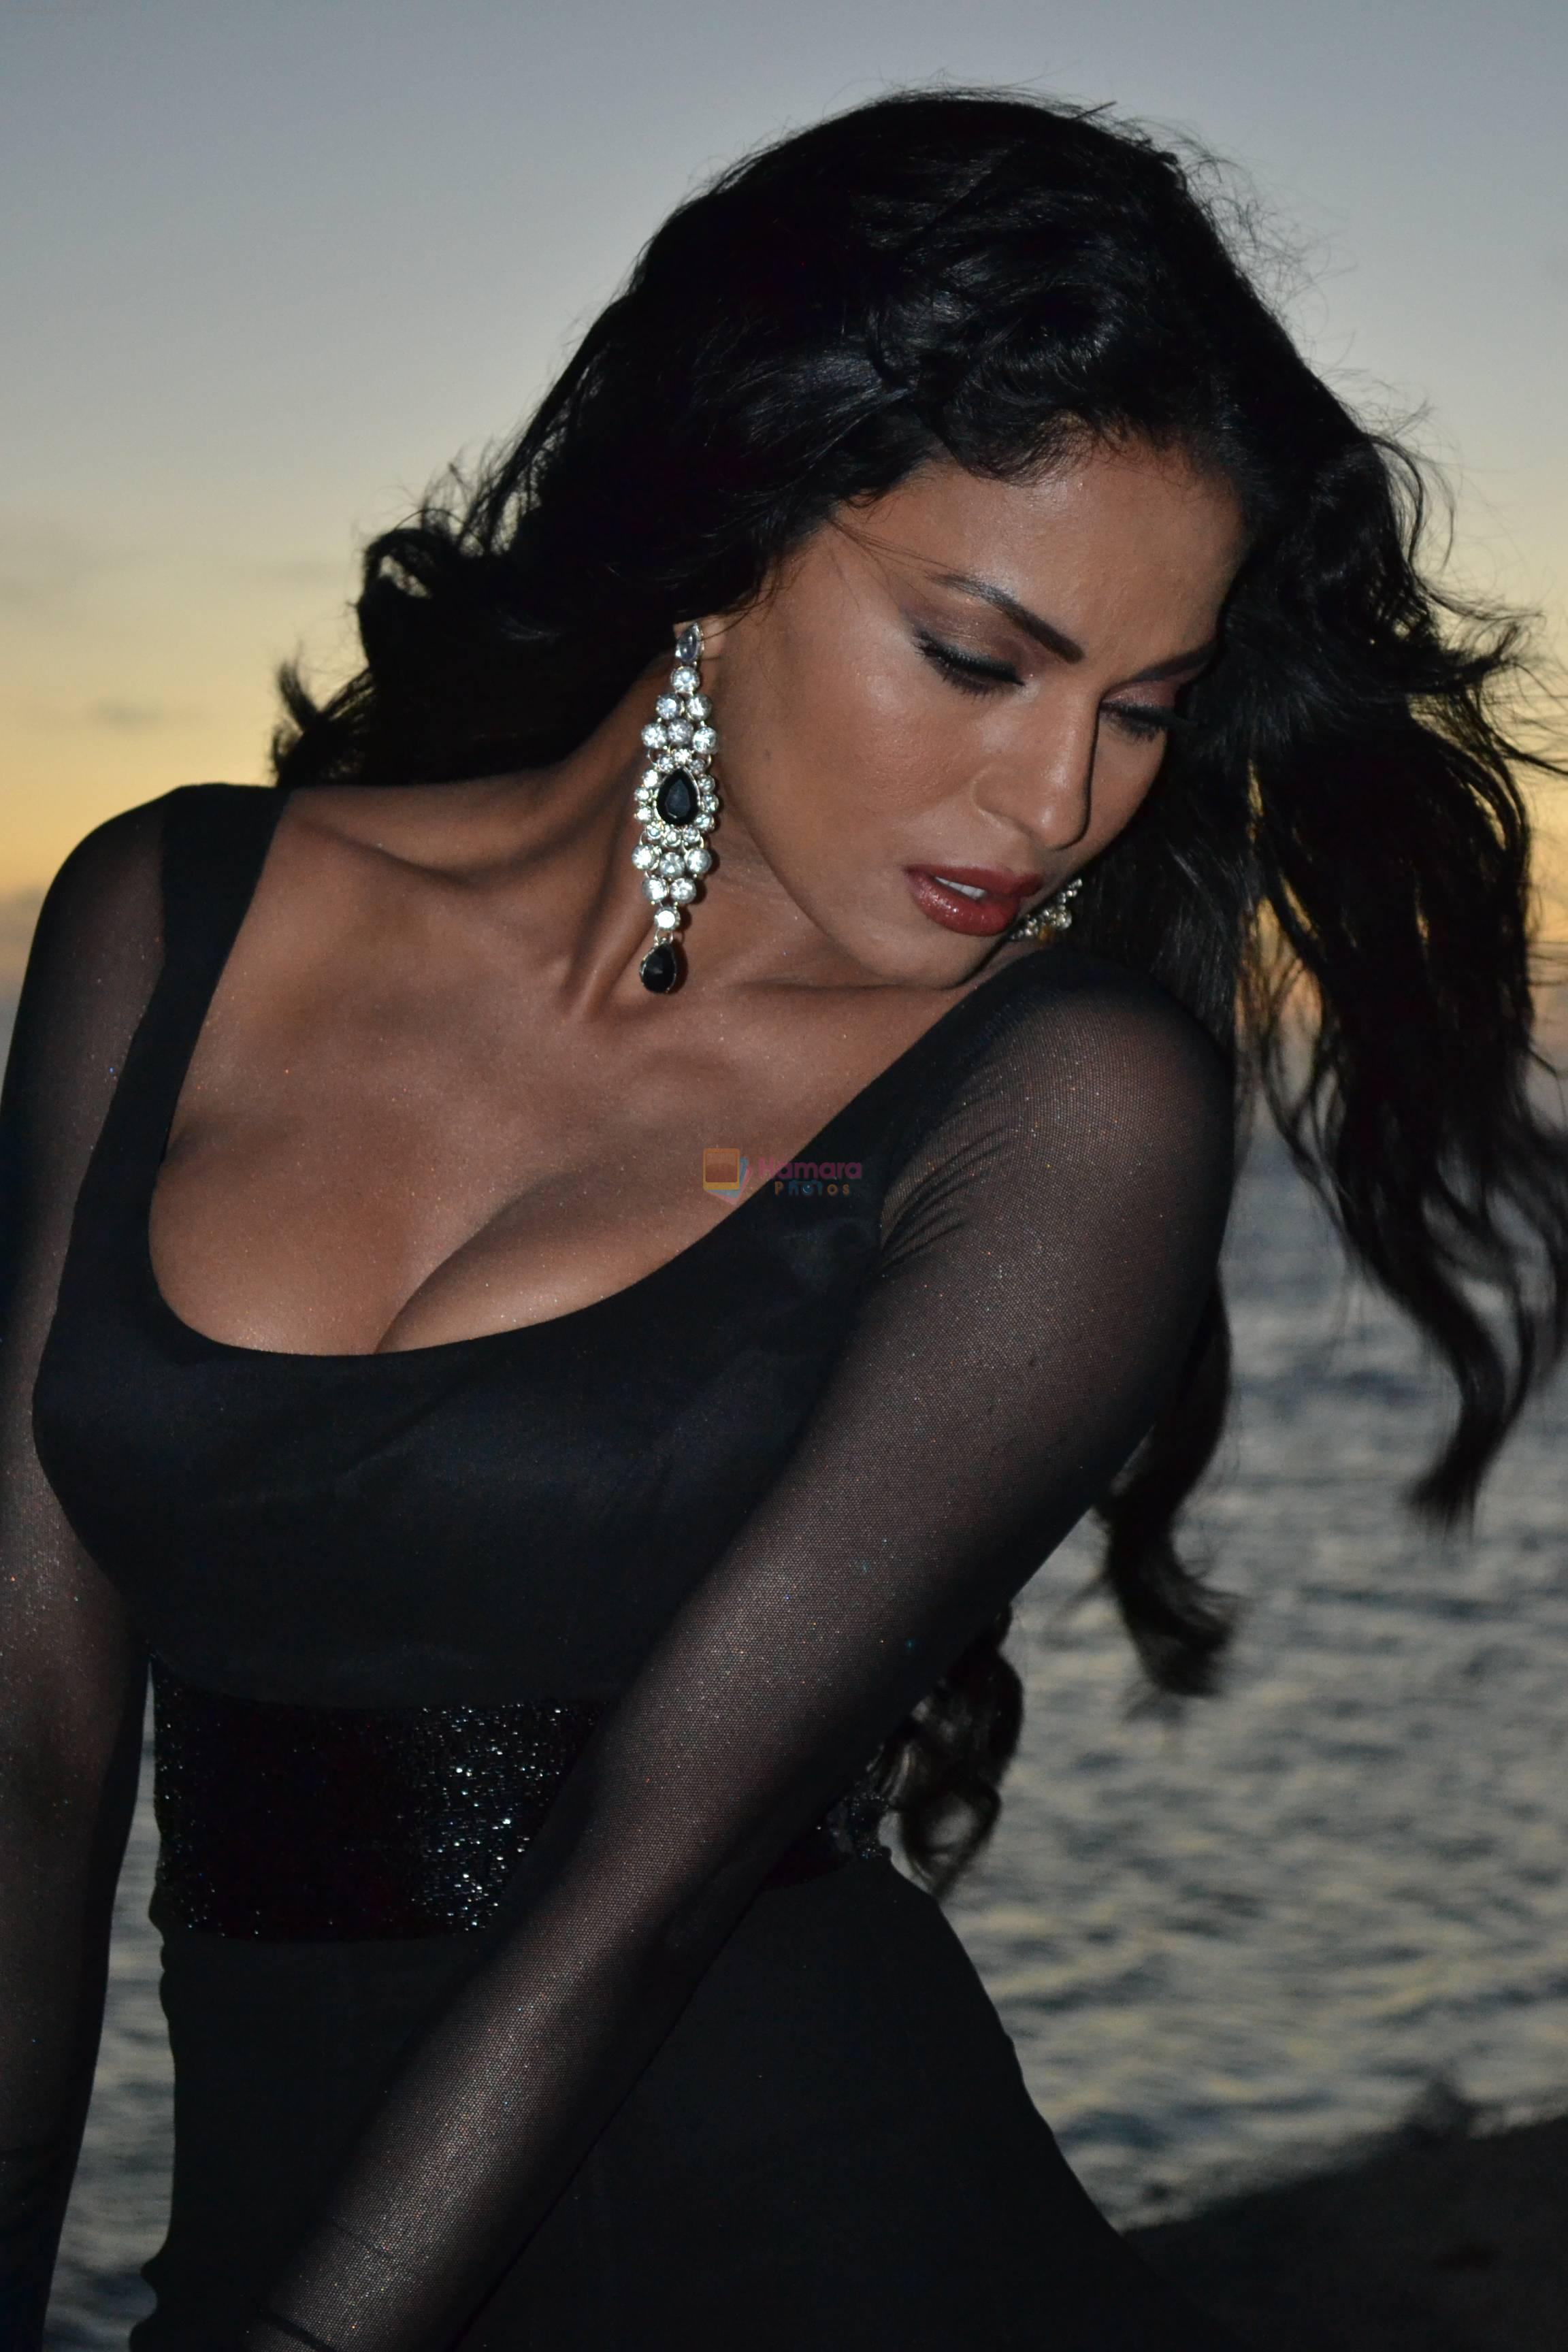 Veena Malik peforming Tujhse Alag song in Super Model